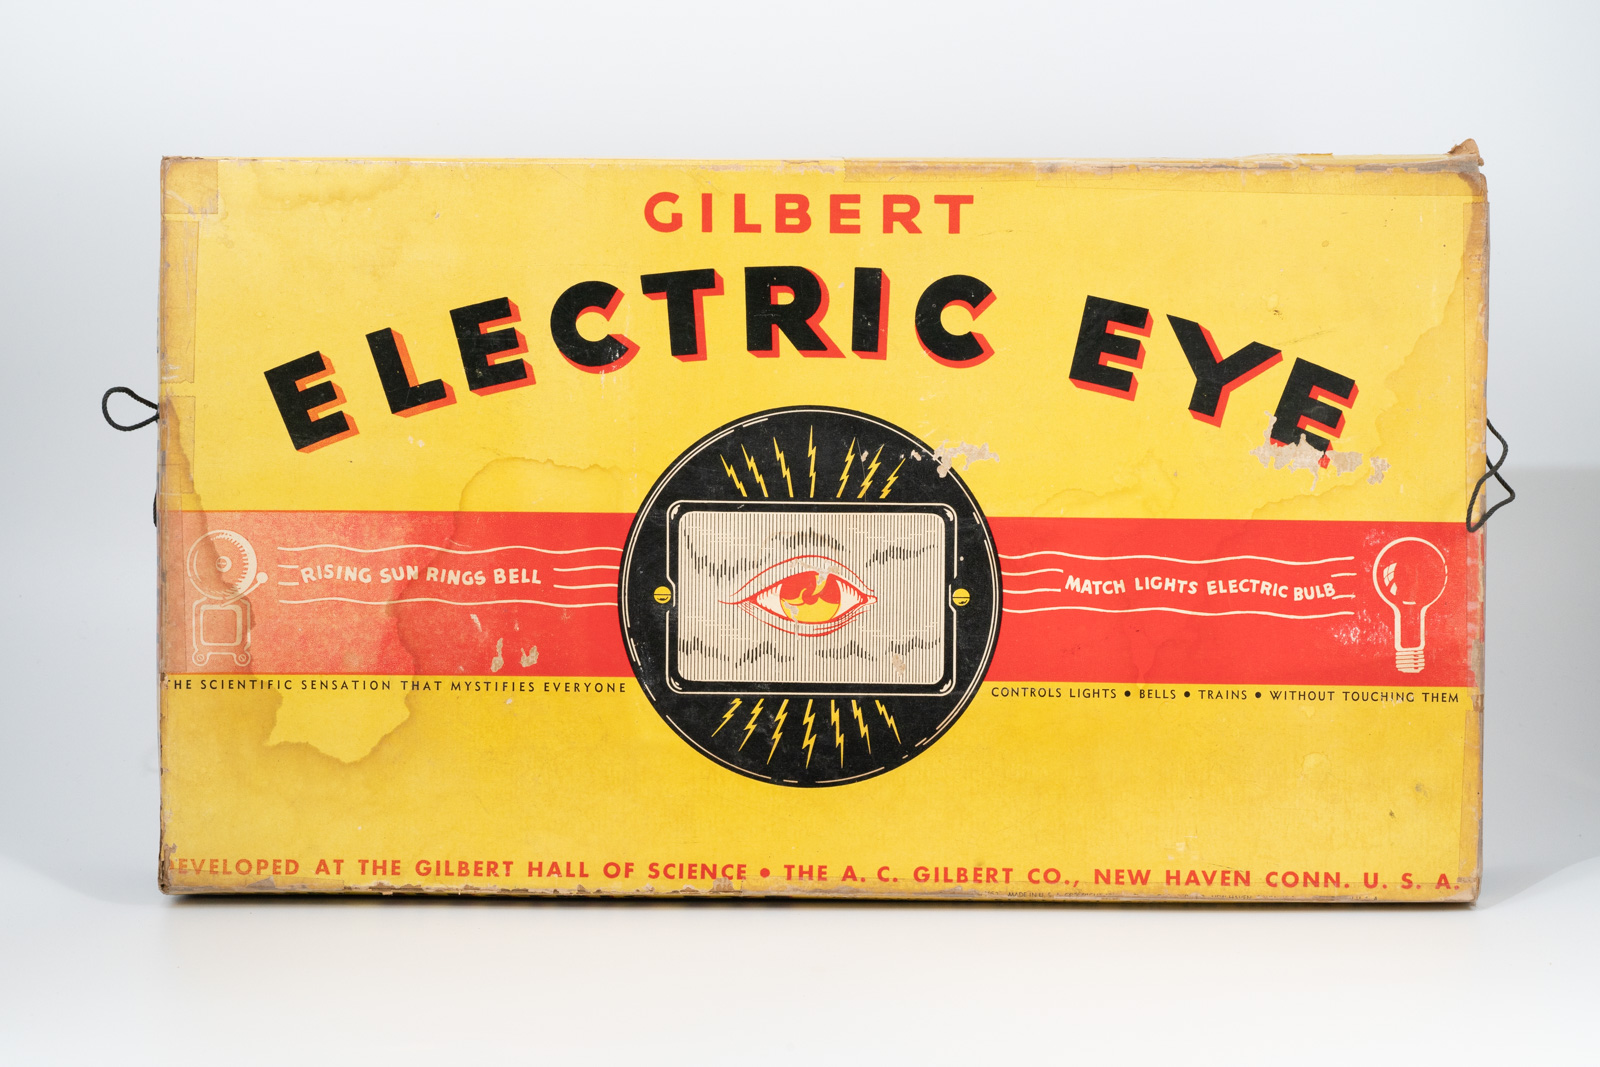 Gilbert Electric Eye Kit